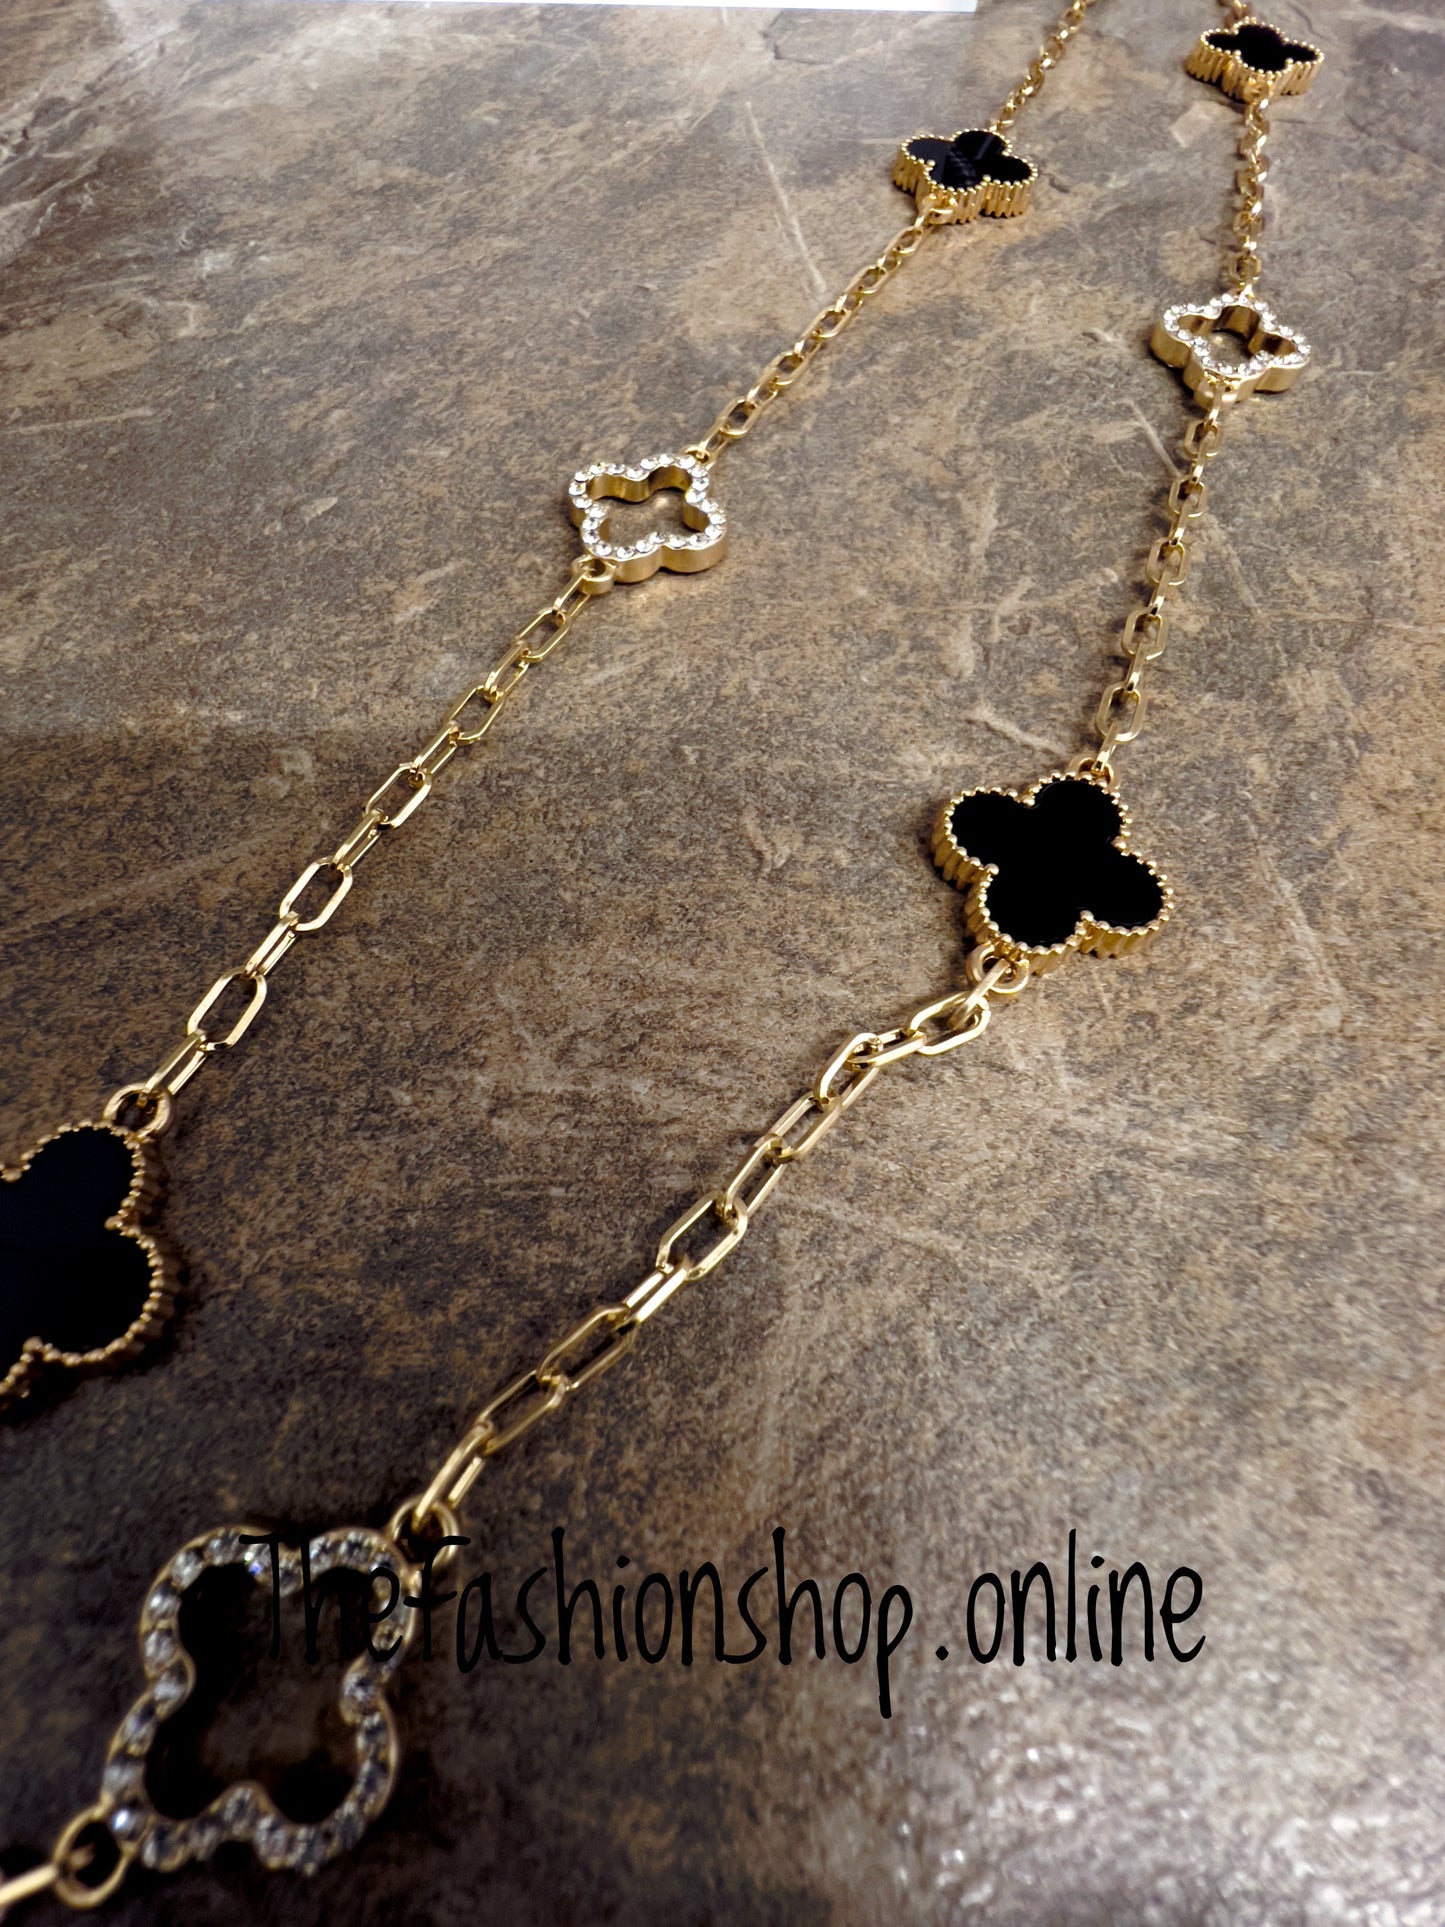 Envy black and gold sparkle clover necklace